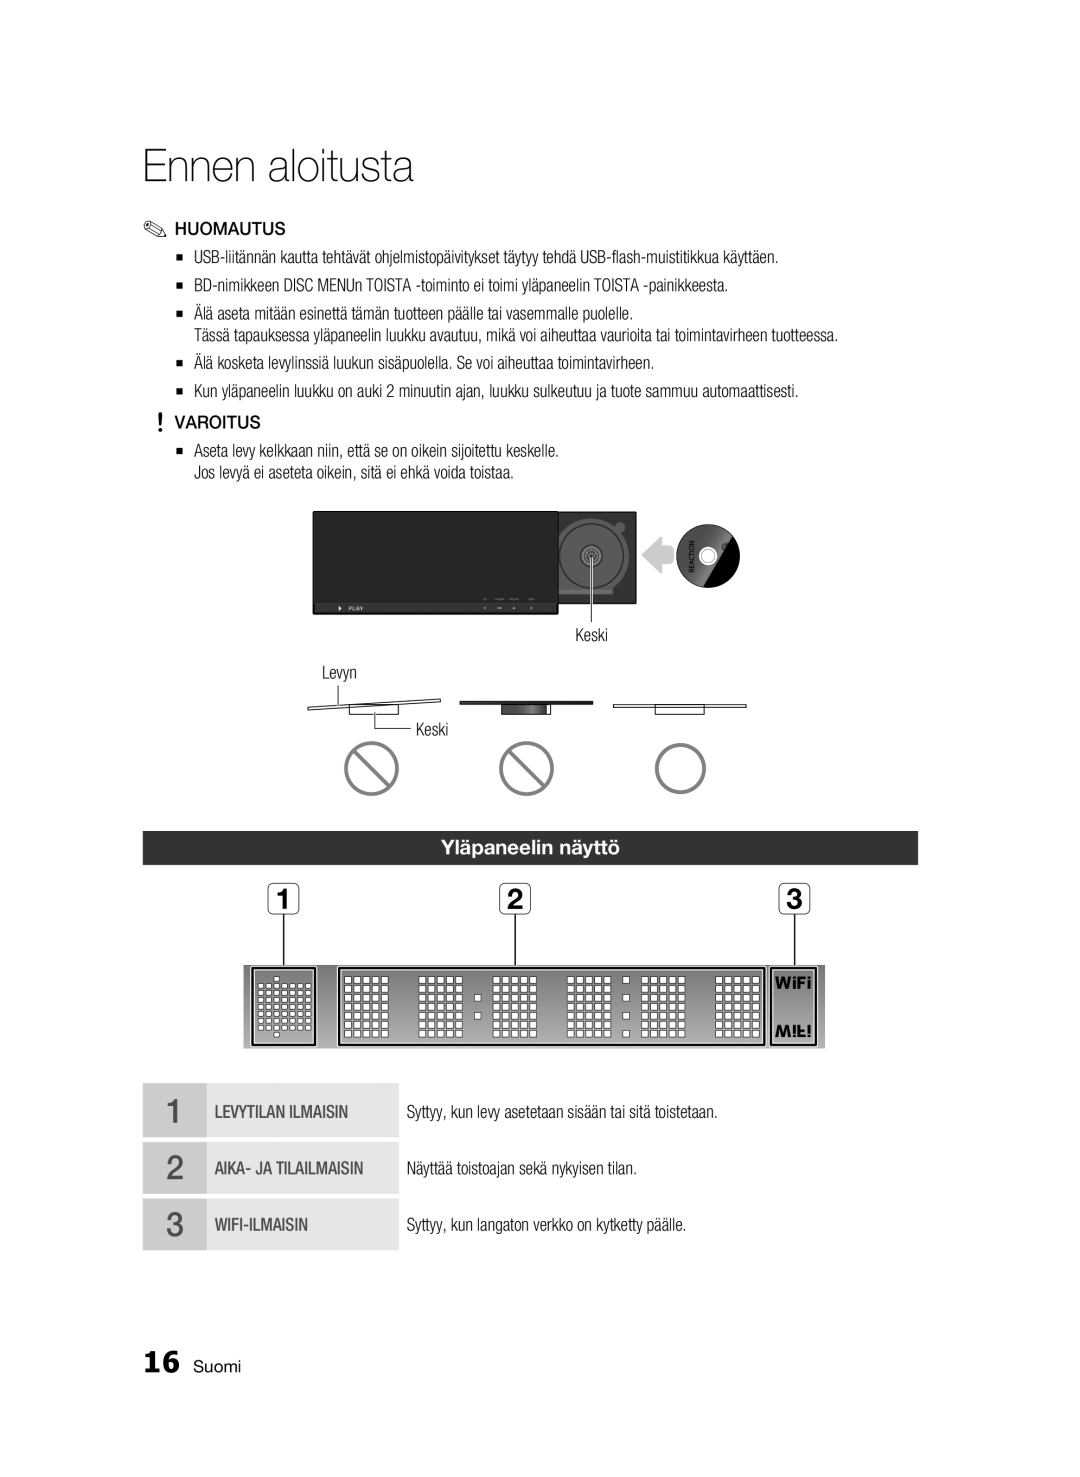 Samsung BD-C7500W/XEE manual Yläpaneelin näyttö, Varoitus, Keski Levyn 